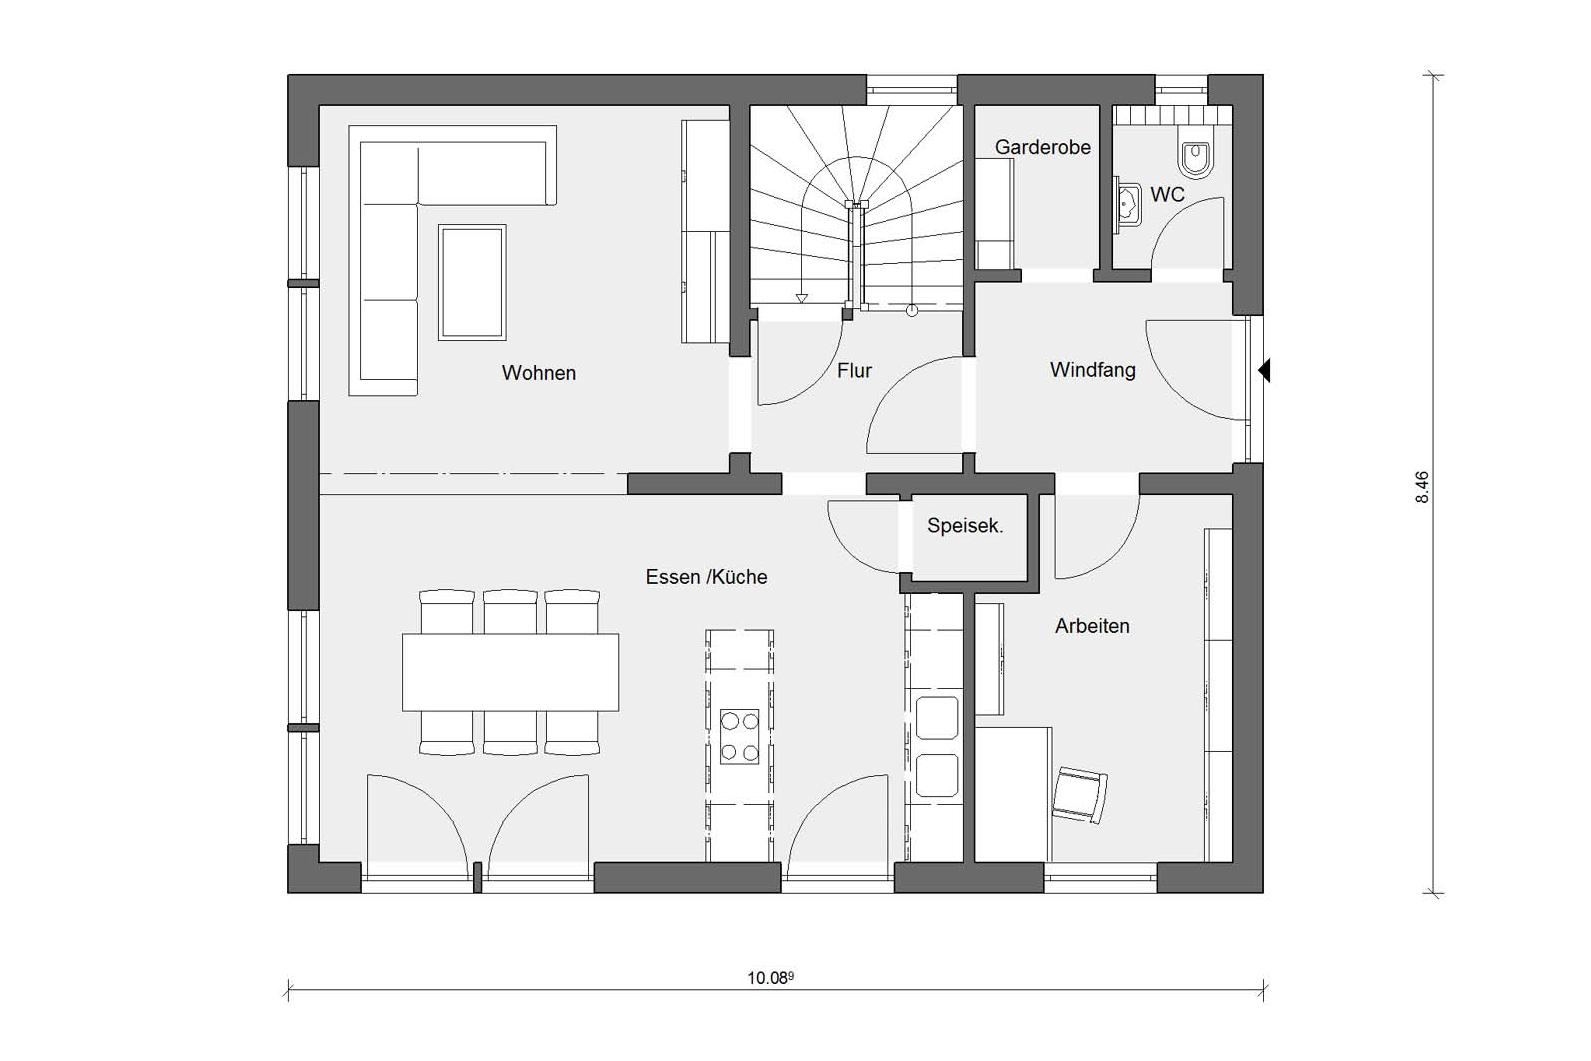 Ground floor floor plan E 15-140.4 House with office